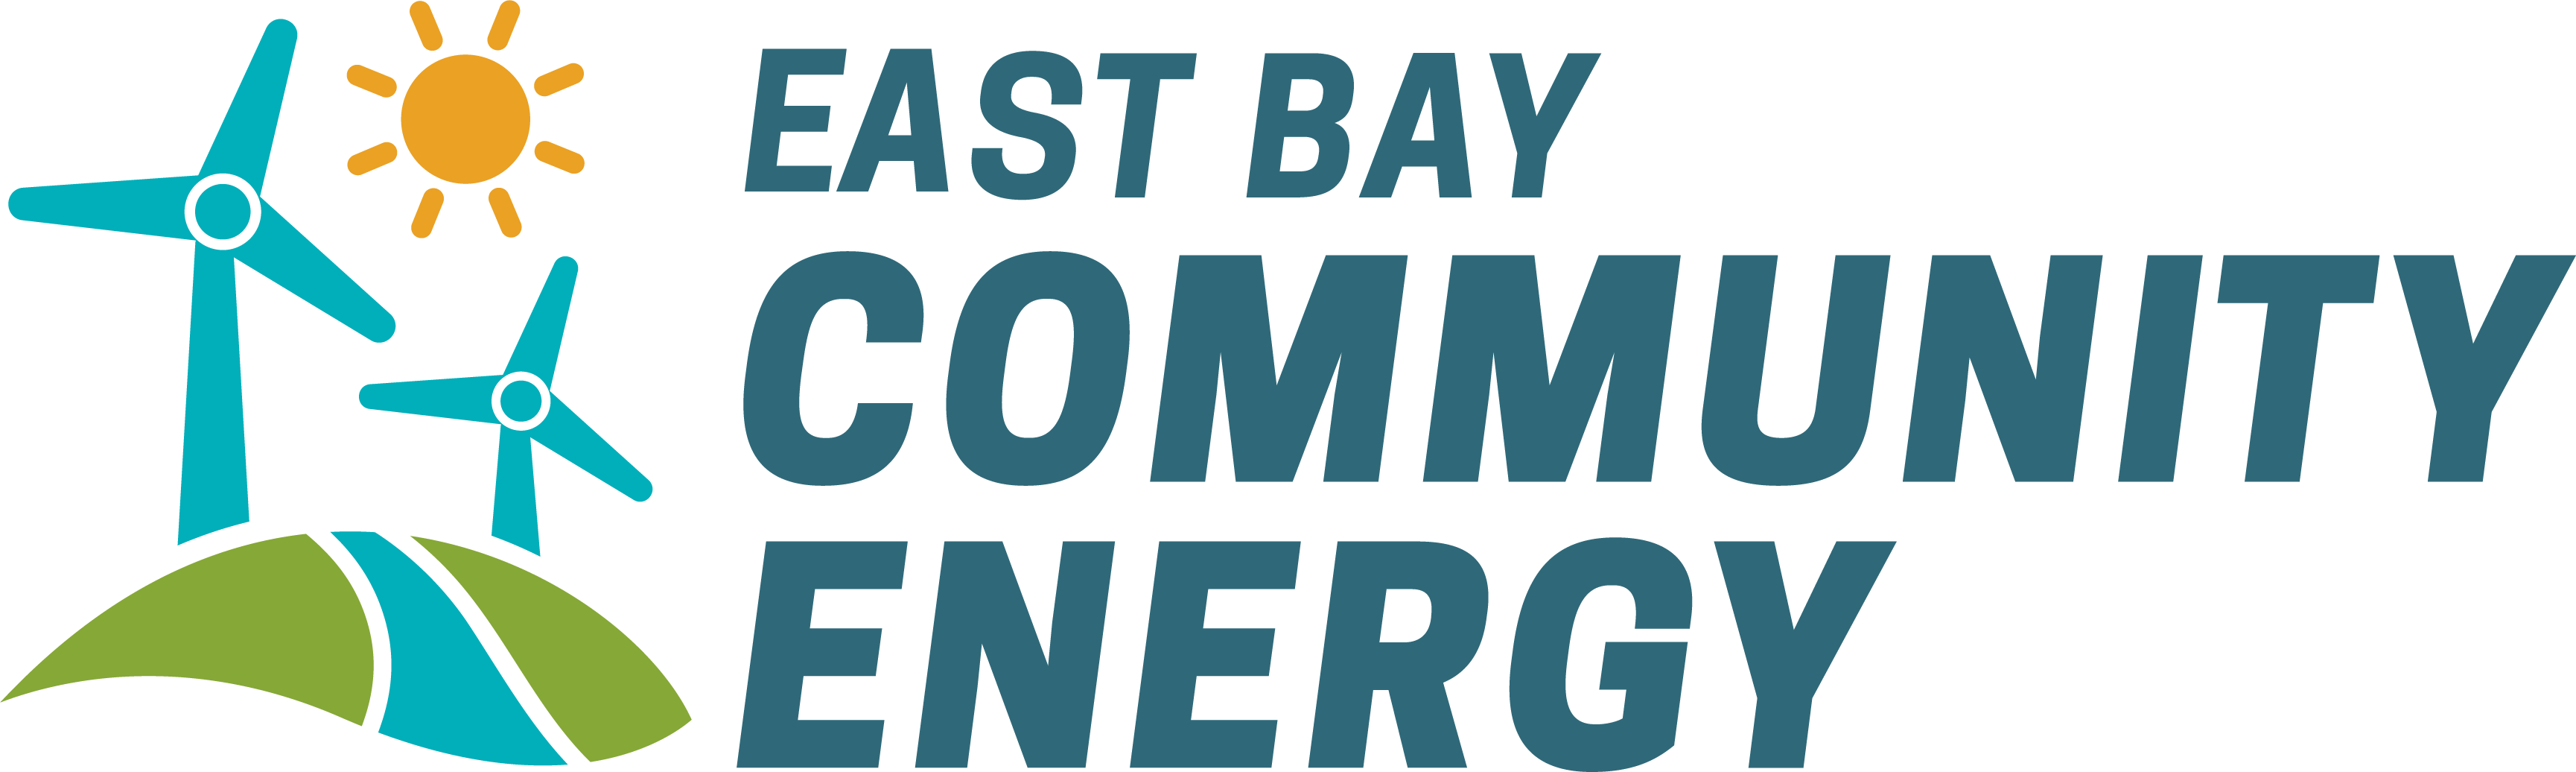 East Bay Community Engery